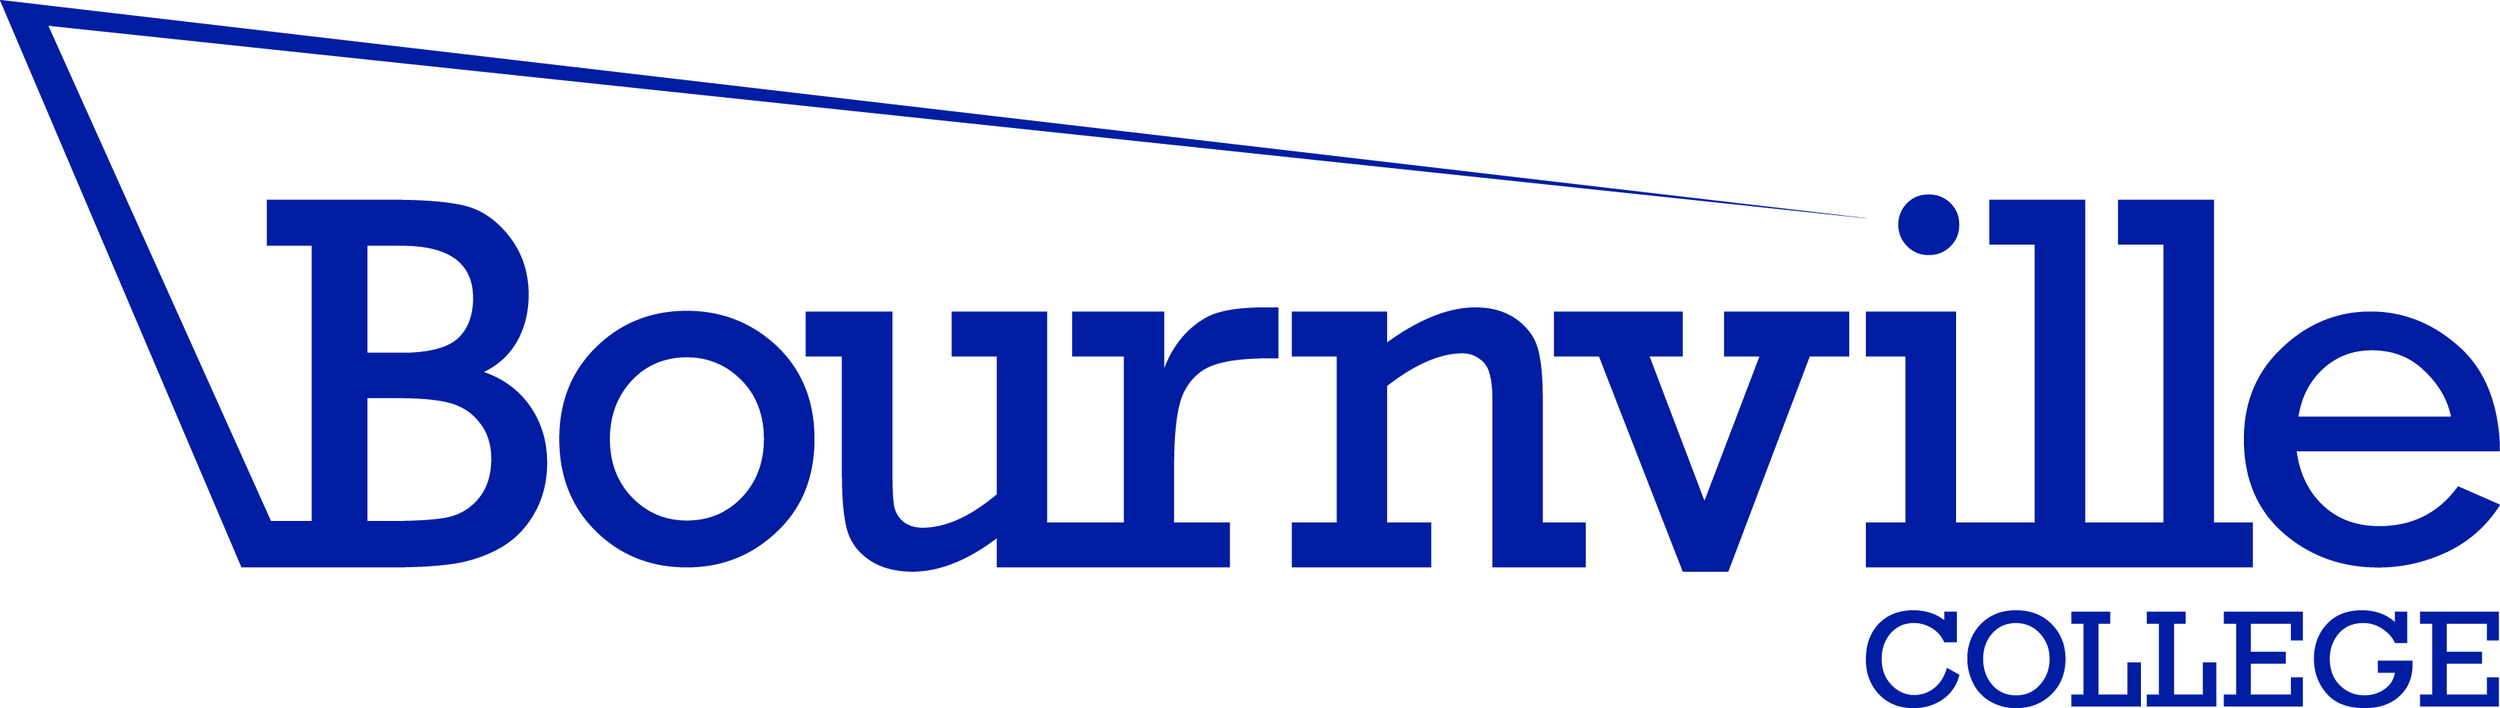 Bournville Logo - BLUE.jpg